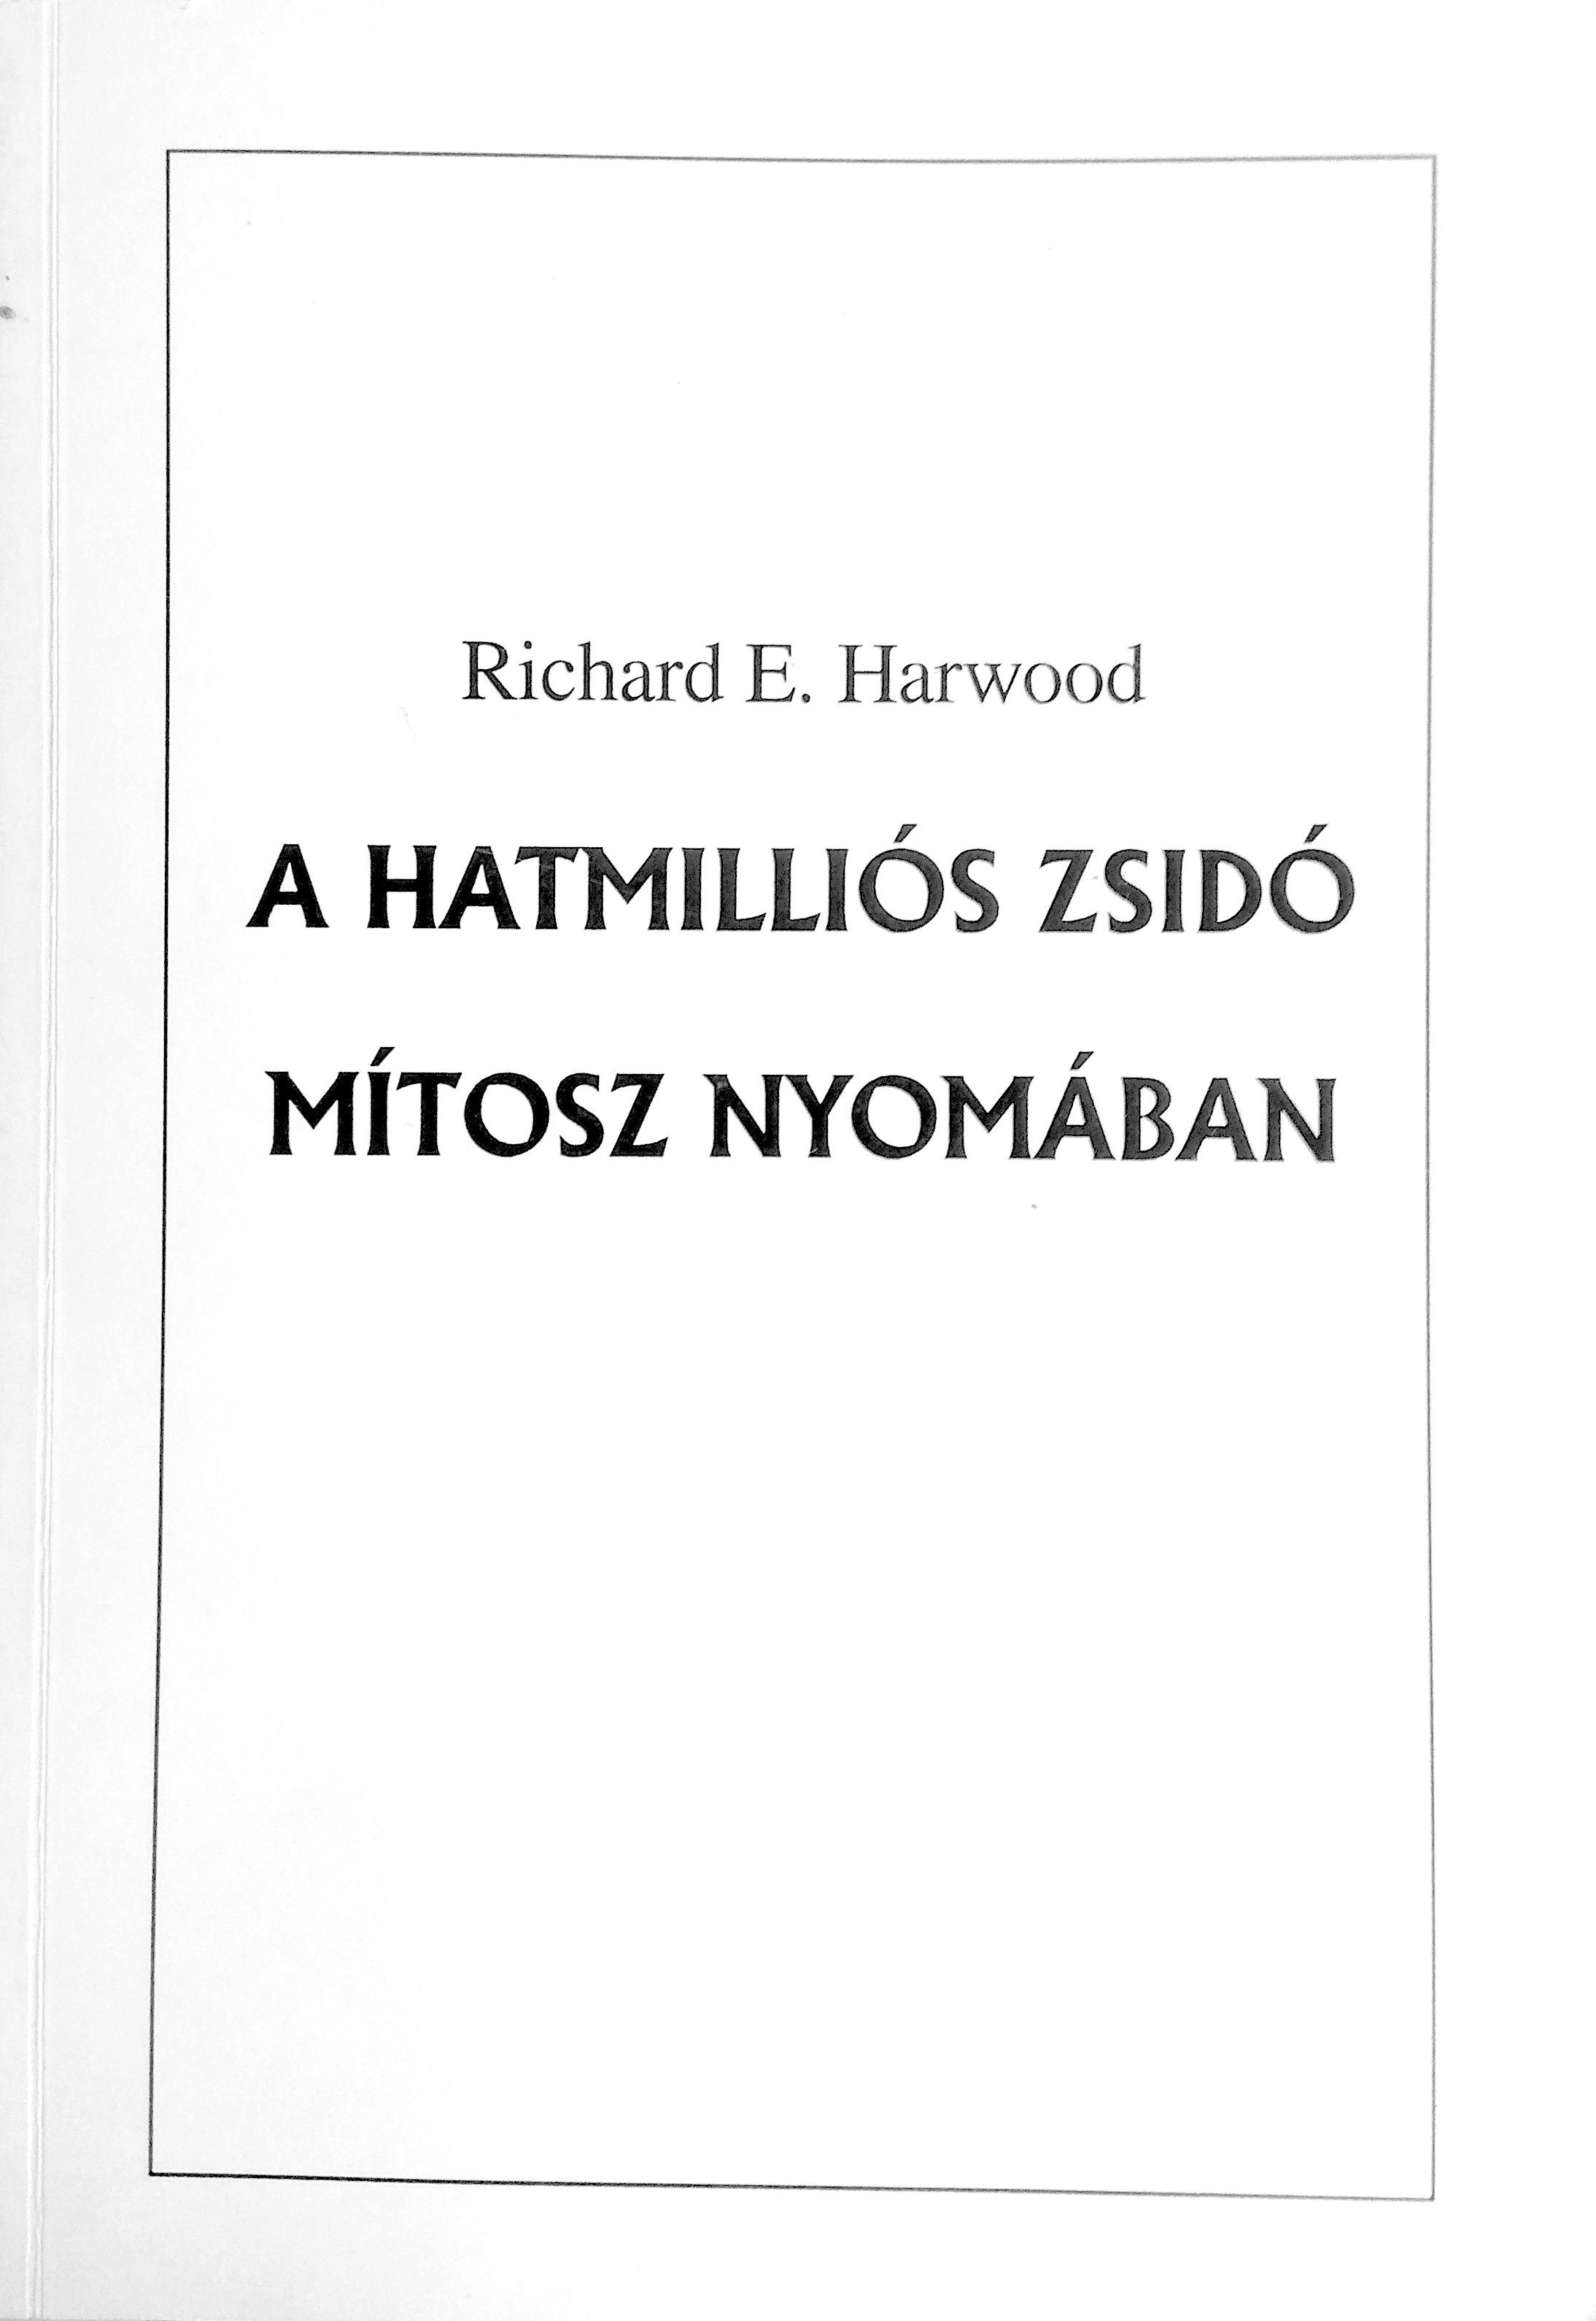 harwood_a_hatmillios_zsido_mitosz_nyomaban.jpg